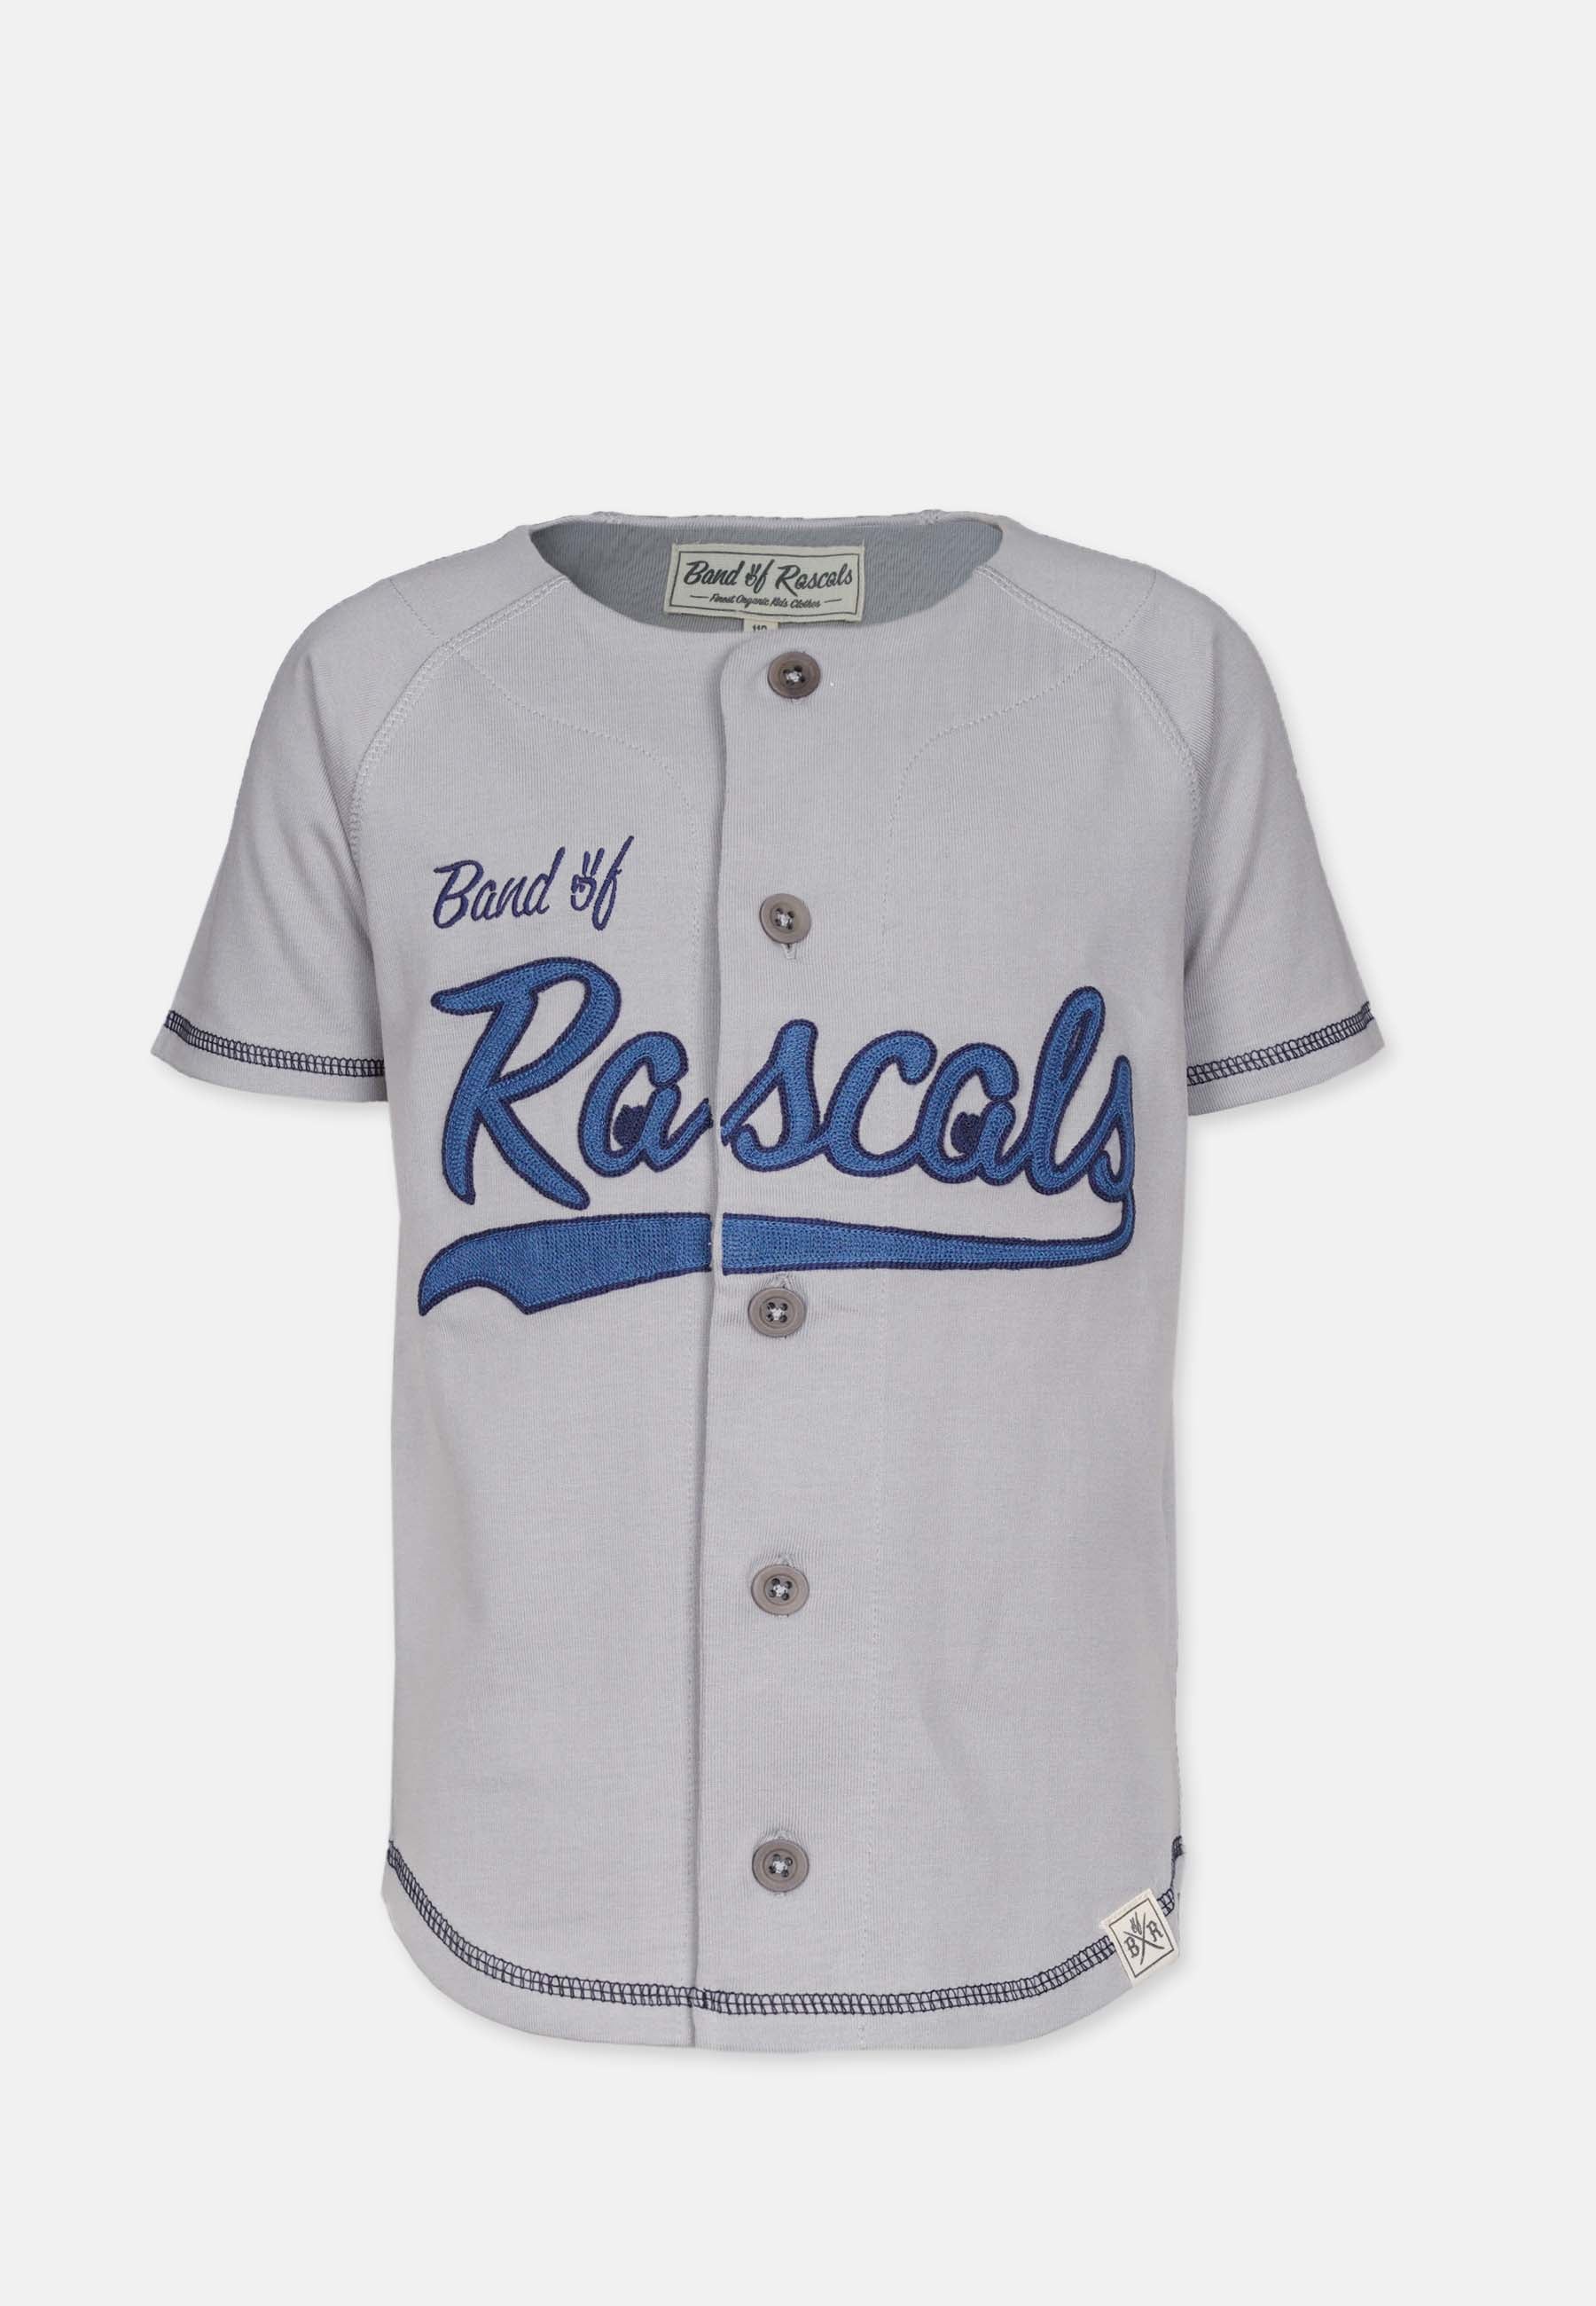 Crooklyn Rascals Shirt